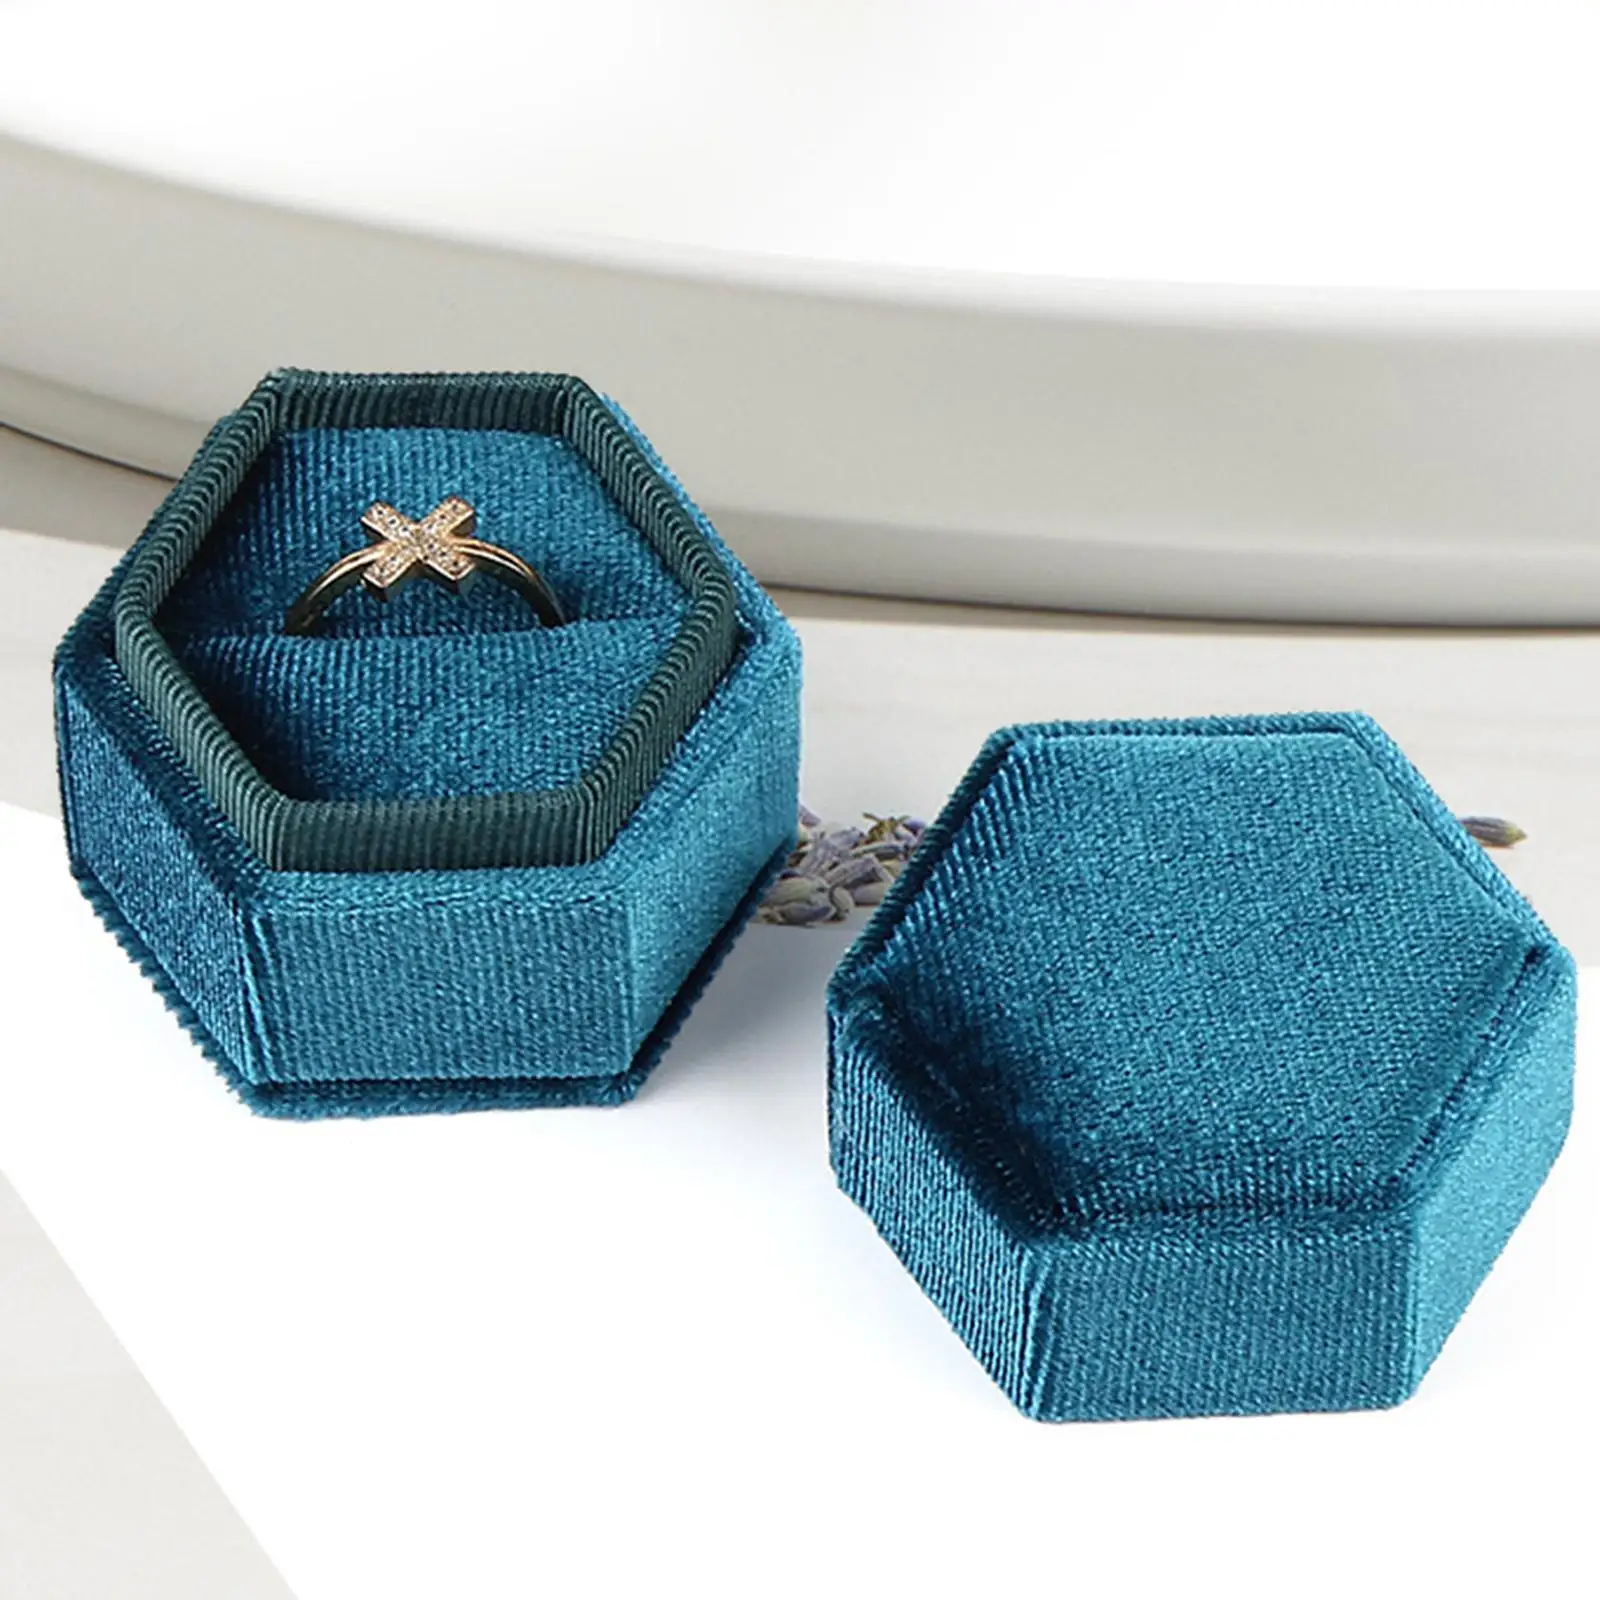 Ring Box Case Hexagonal Display Box Organizer Earrings Box Velvet Jewelry Box for Ceremony Valentine Proposal Anniversary Gifts